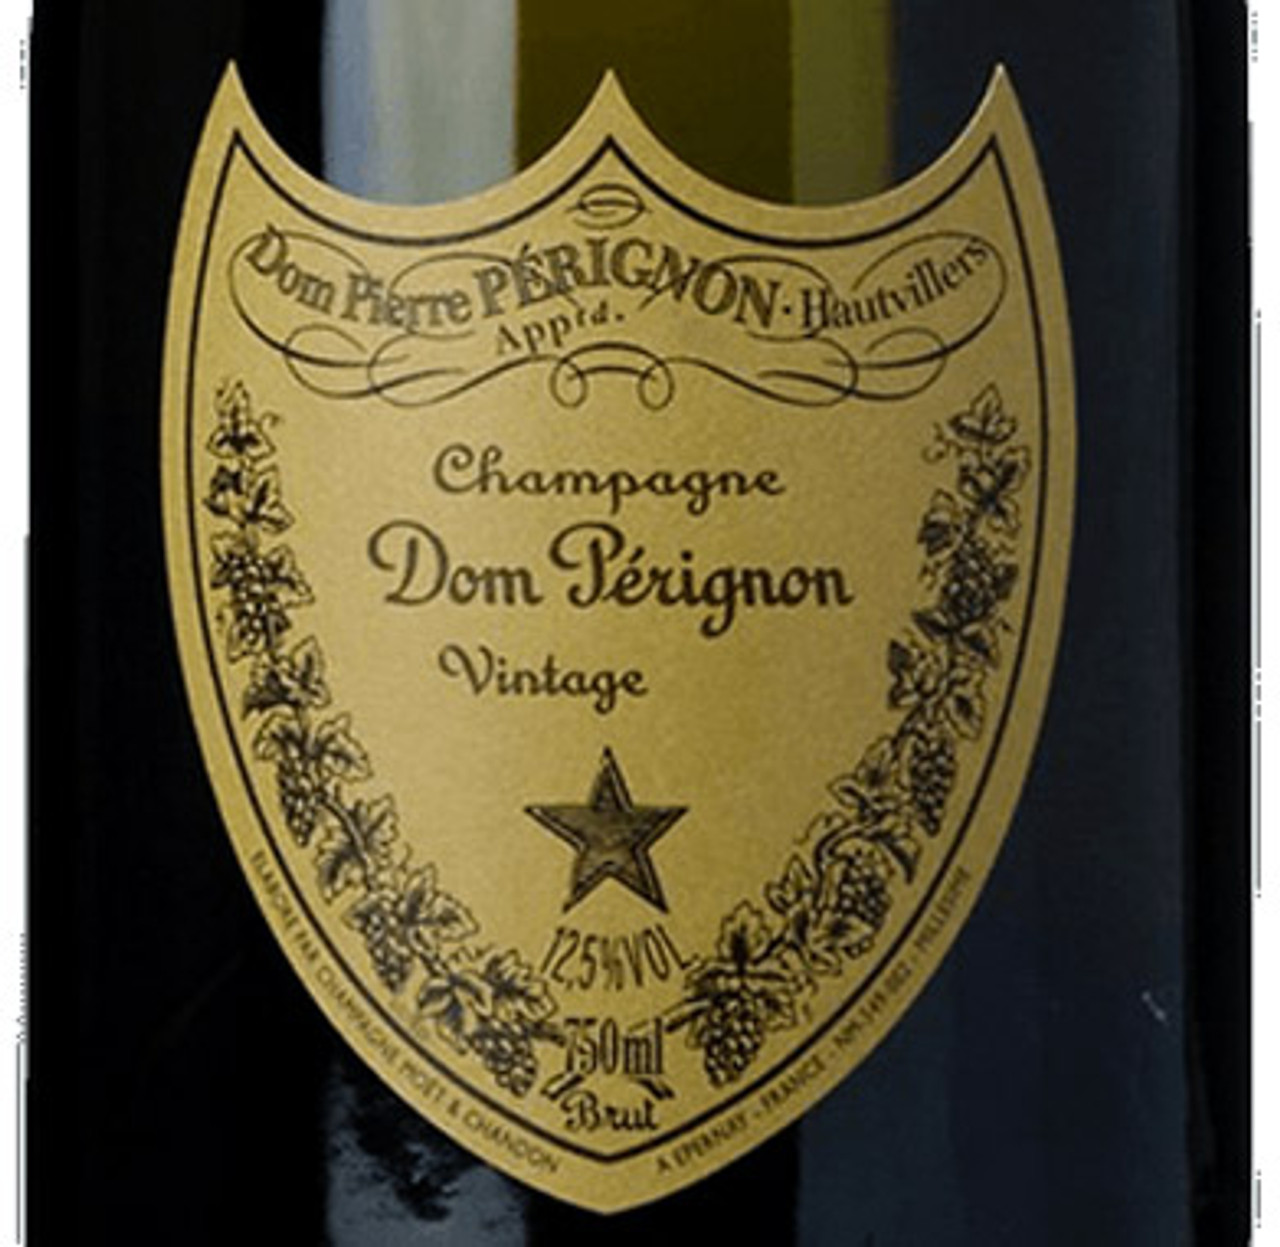 Moet & Chandon Dom Perignon Champagne Cuvee, France (Vintage Varies) - 750 ml bottle